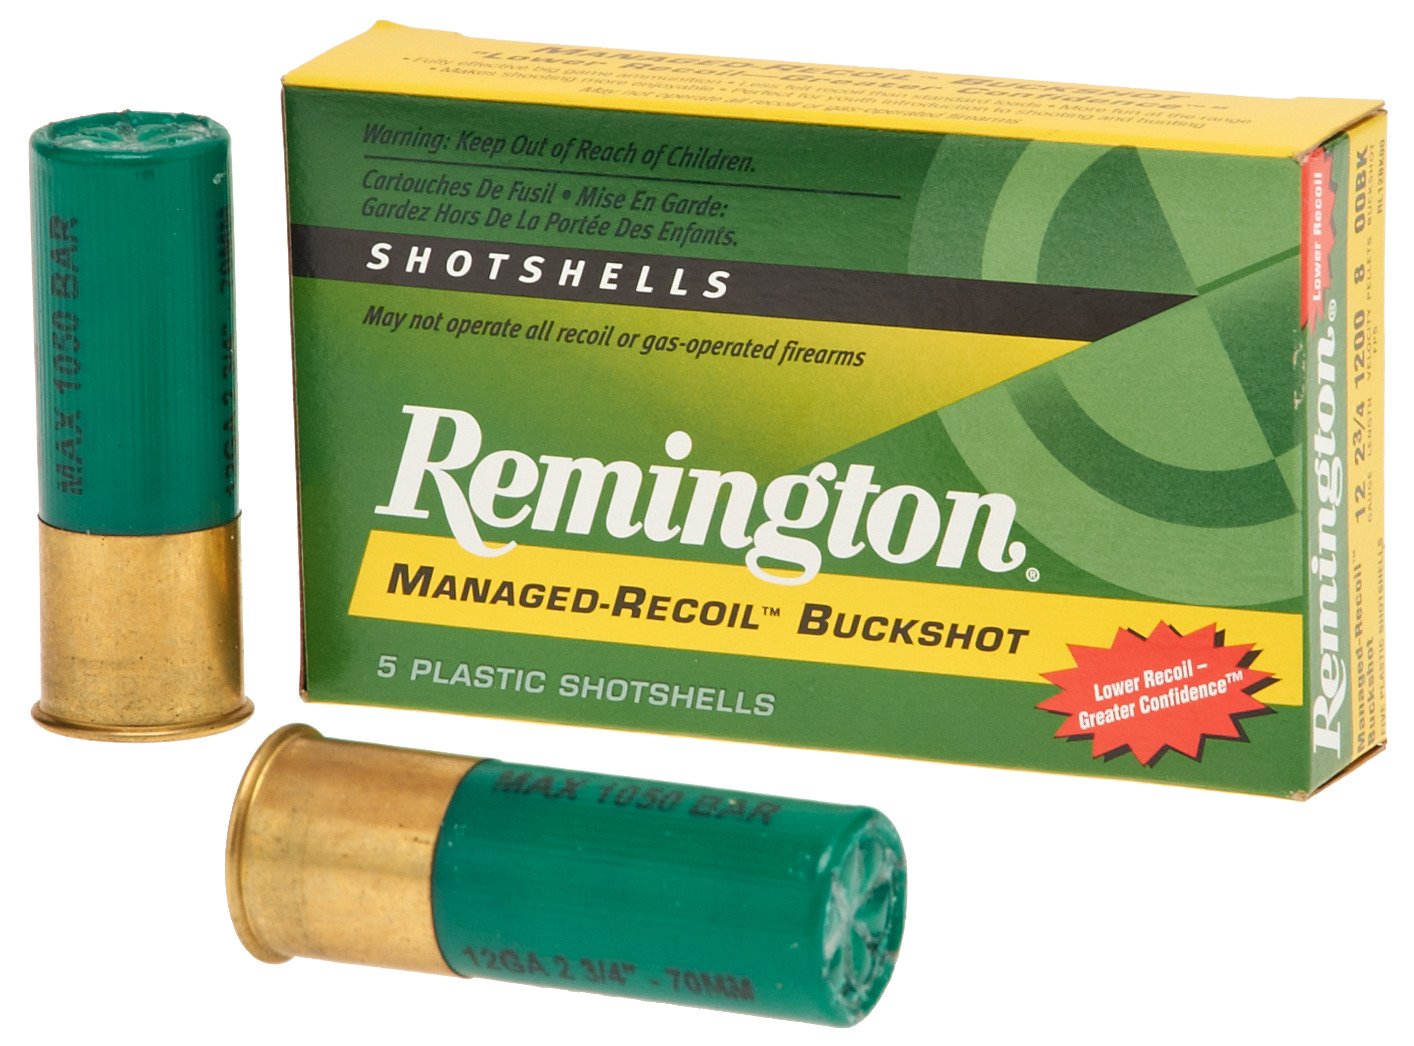 Remington Express Managed-Recoil 12 Gauge Buckshot Shotshells                                                                    - view number 1 selected